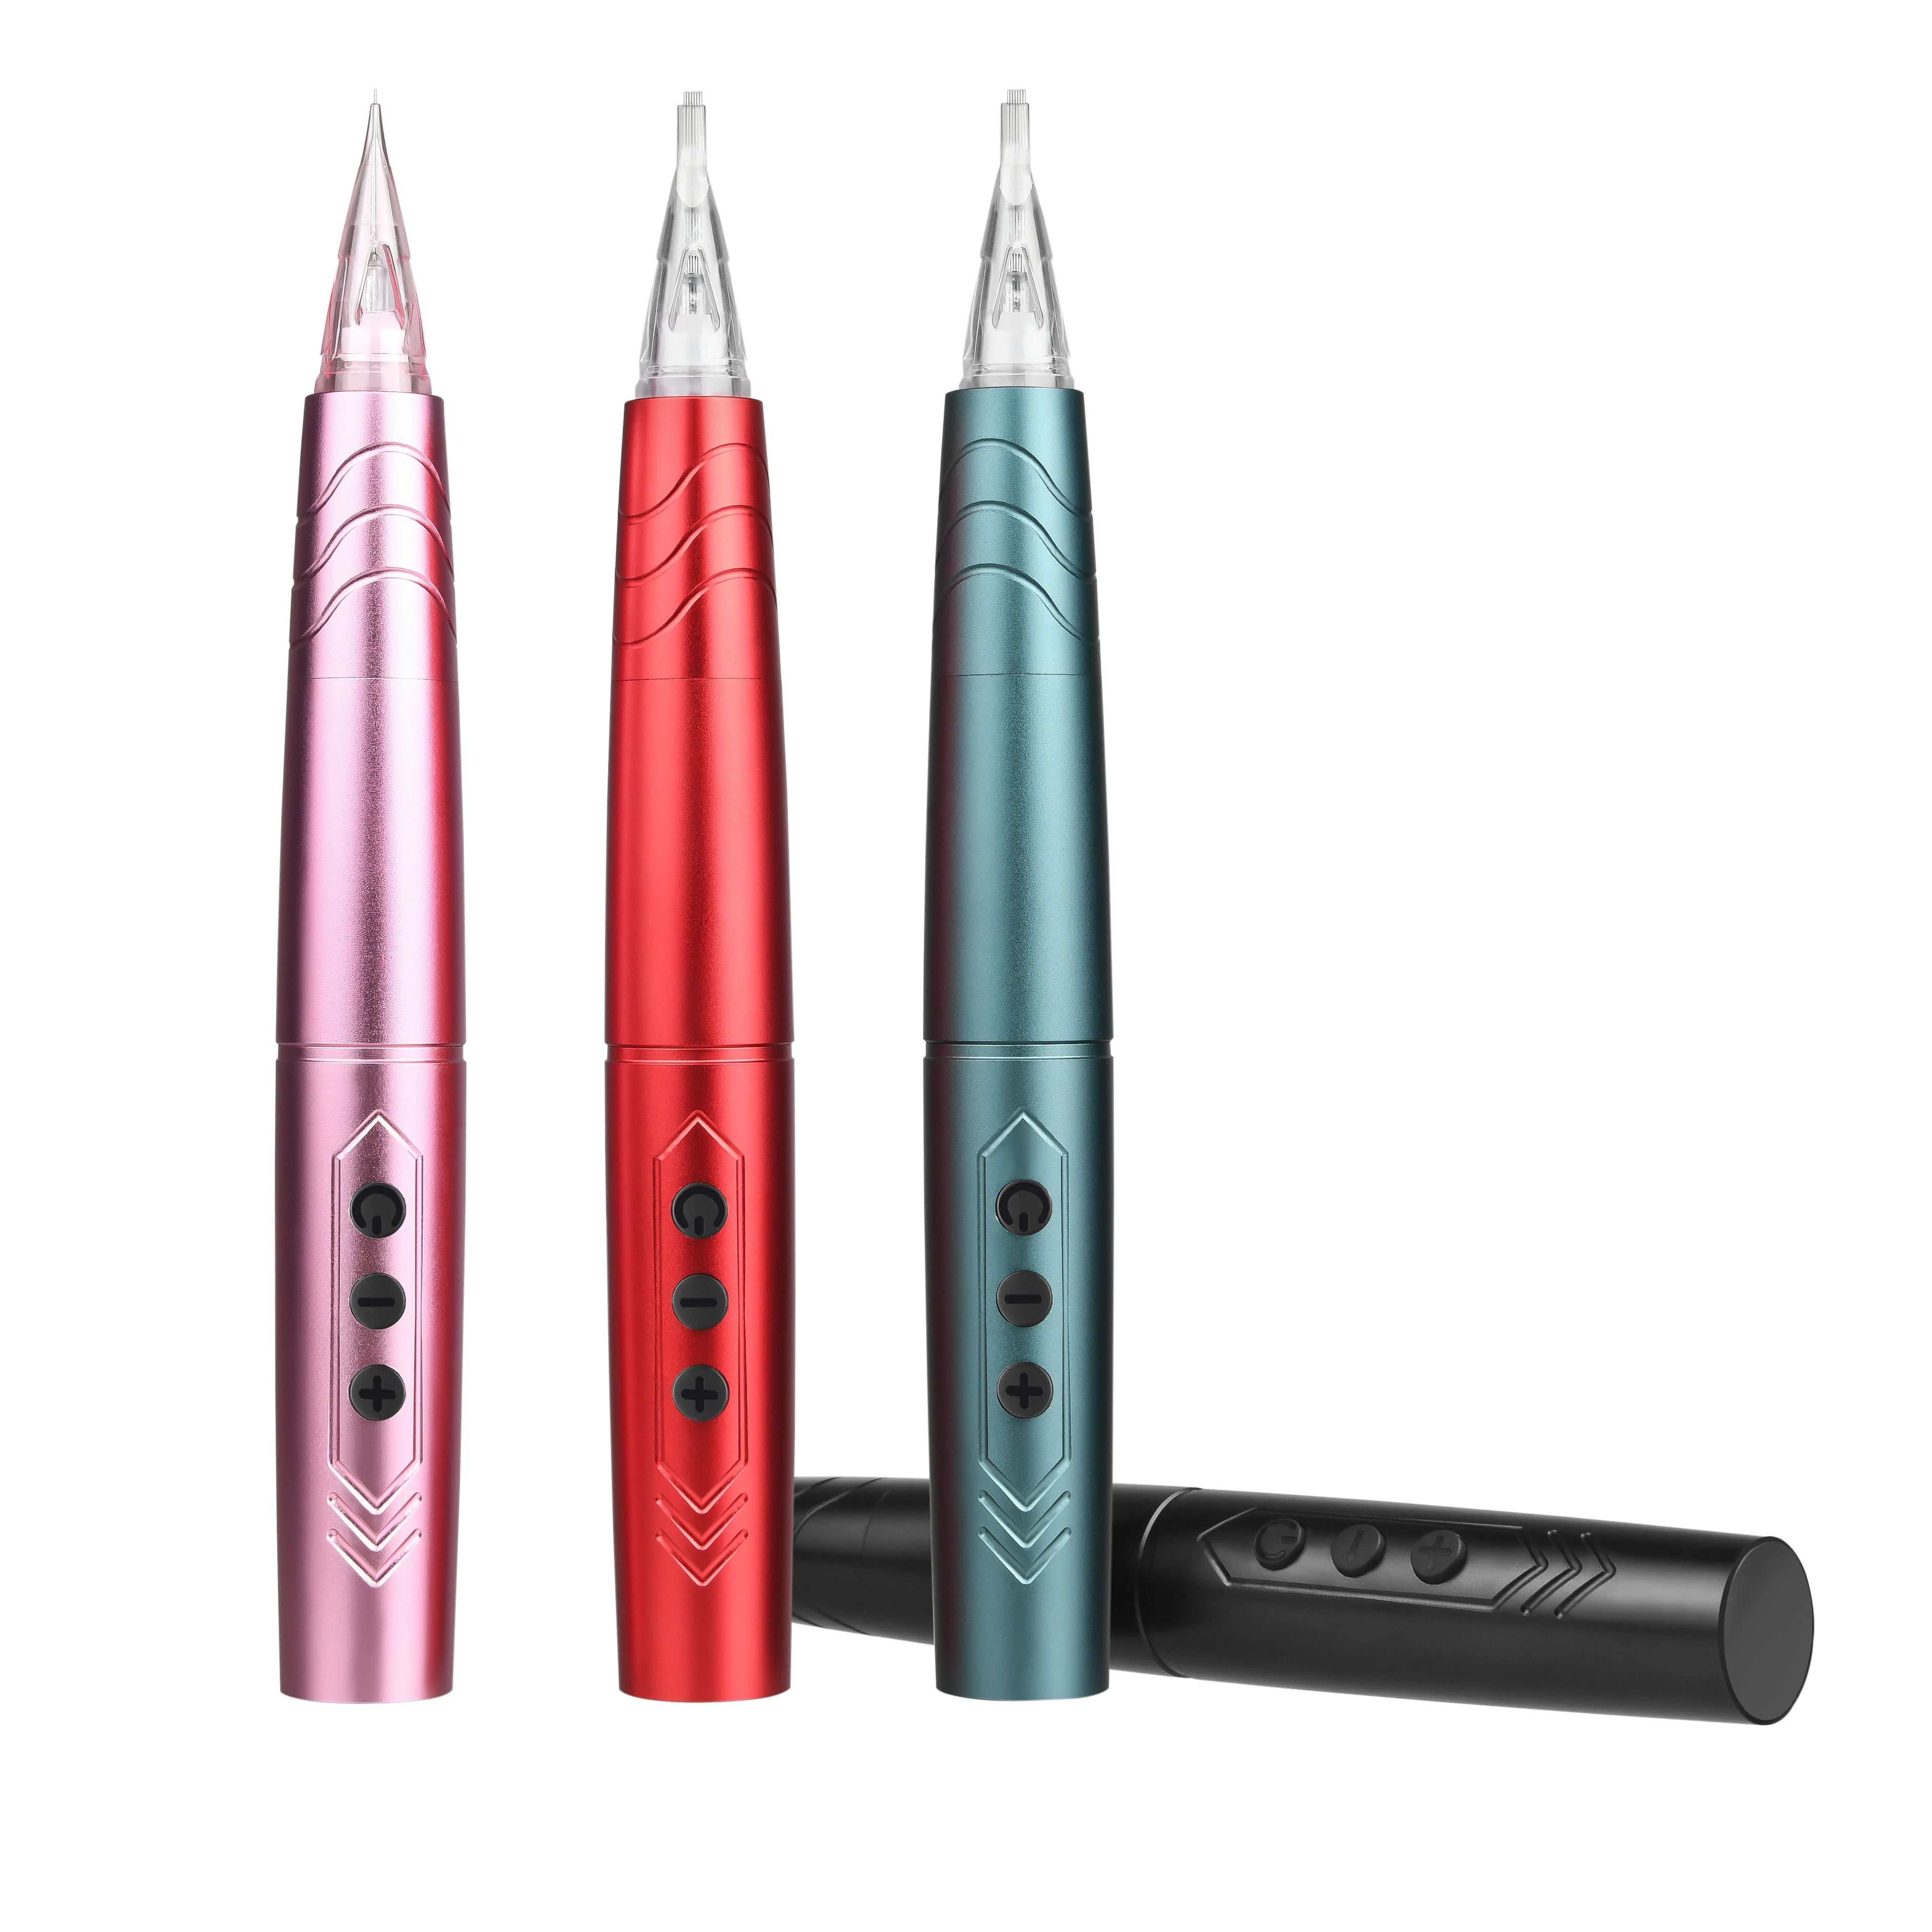 NAOM Two Module Battery Wireless Tattoo Machine Pen Permanent Makeup Eyeliner Lip Tool Micro Pigmentation Semi Permanent